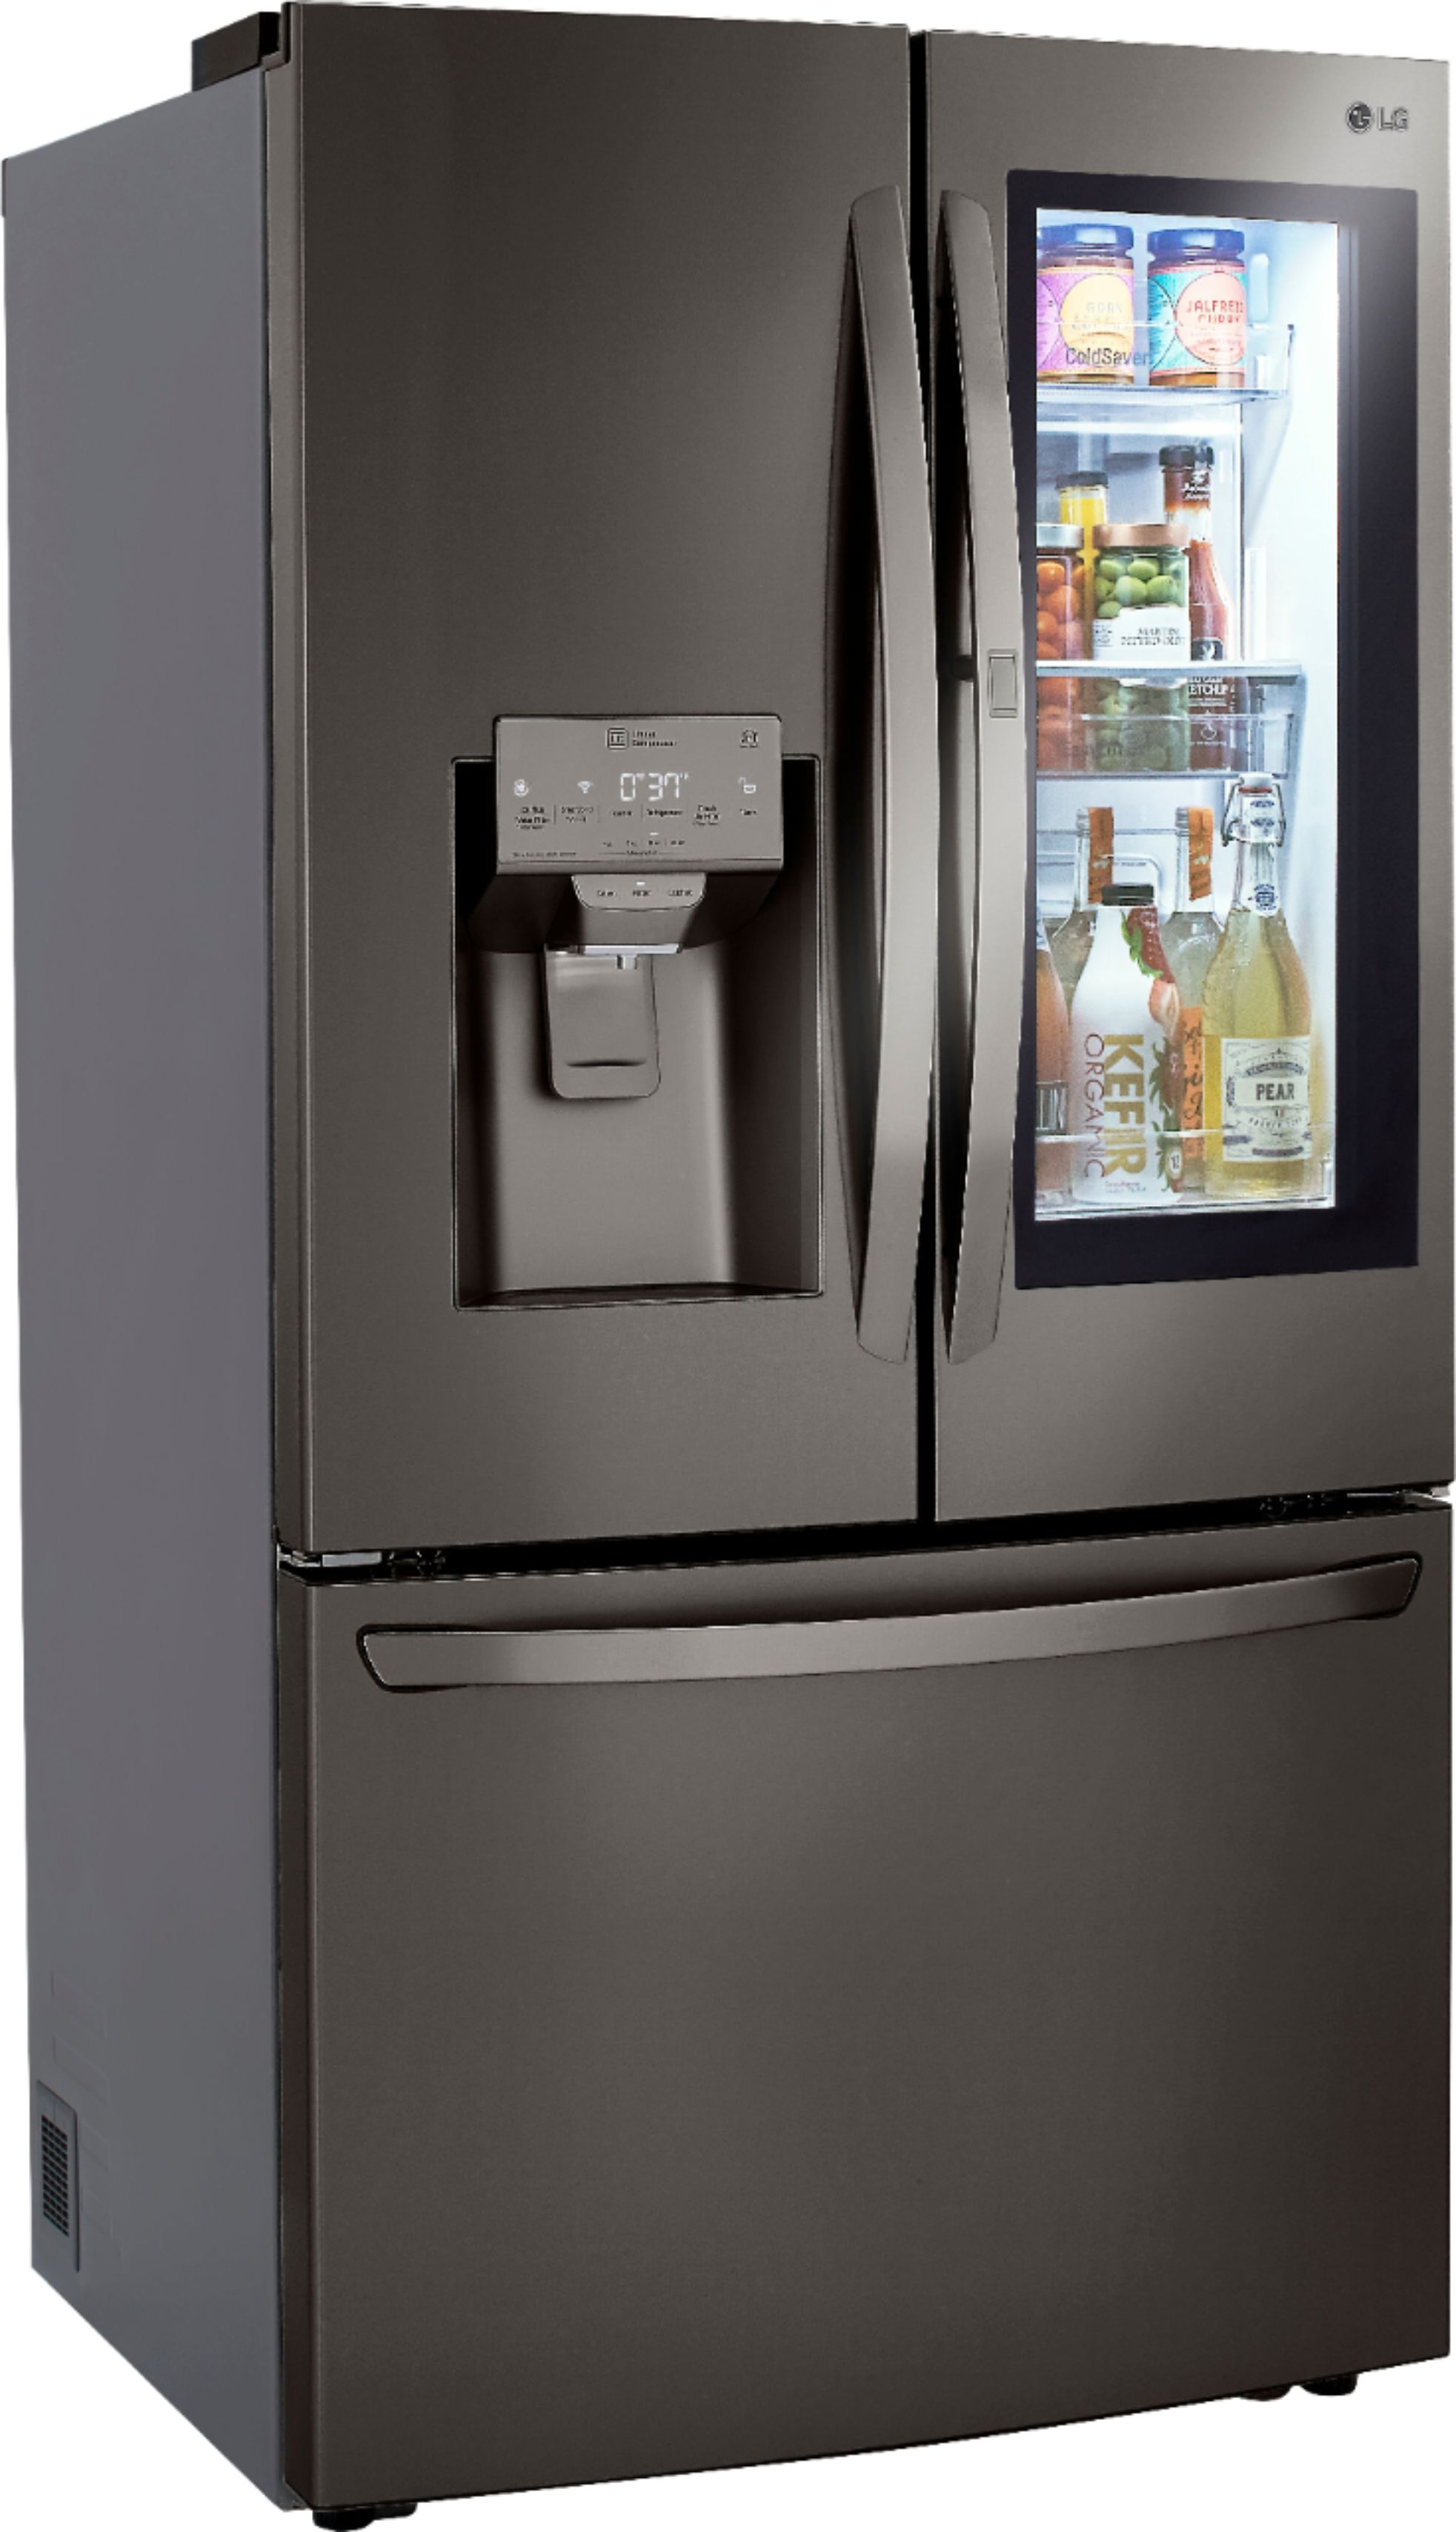 39++ Lg fridge freezer keeps beeping ideas